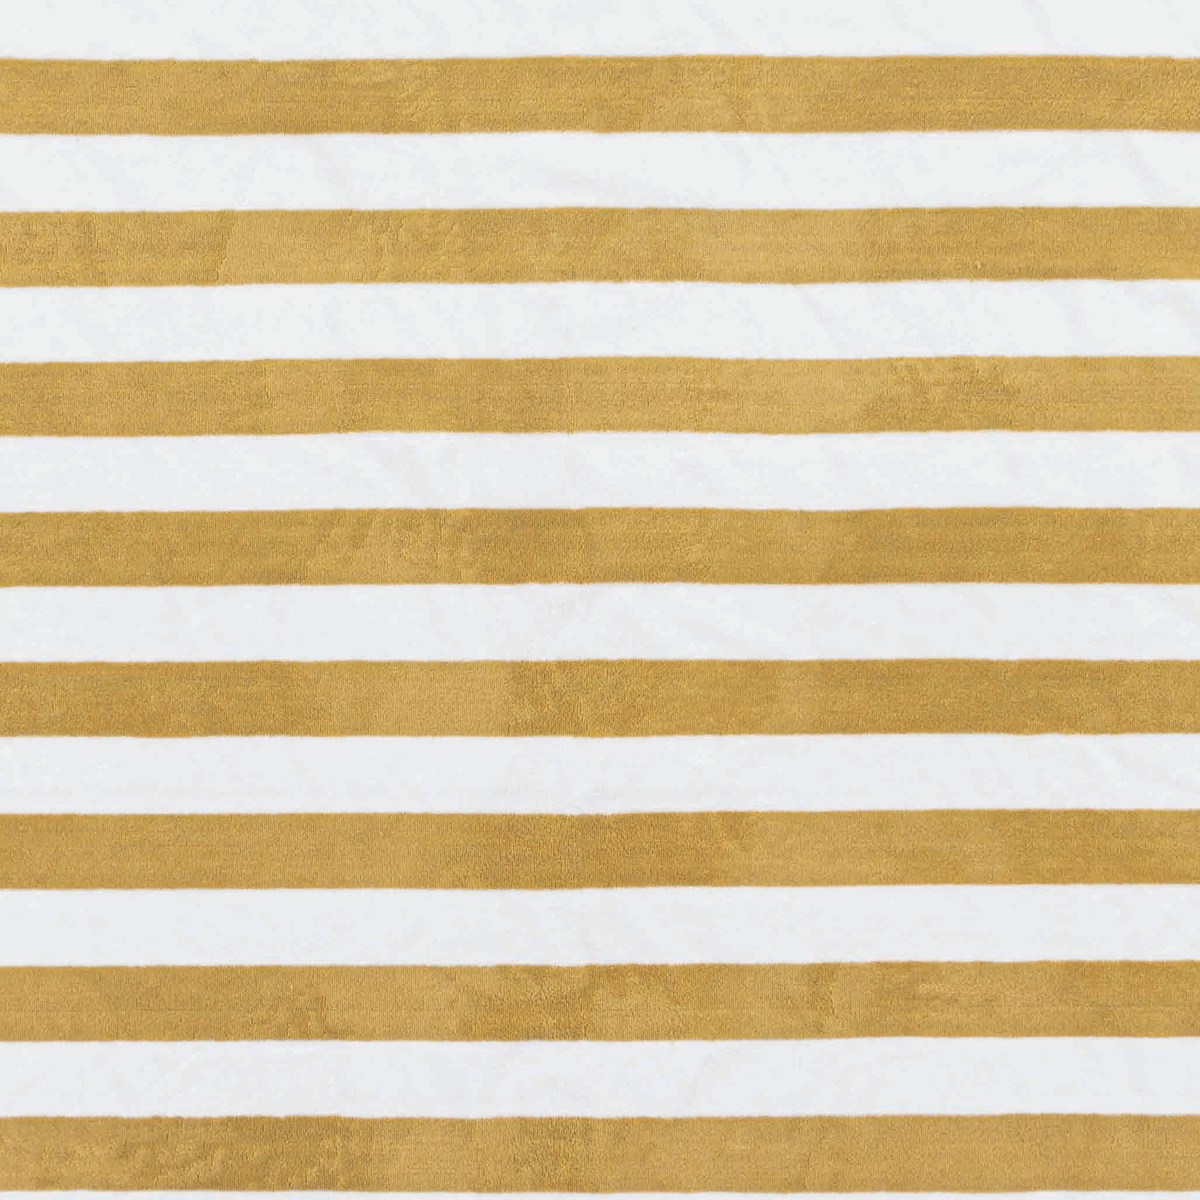 Fabric Closeup of Graccioza Aveiro Beach Towel in Gold Color